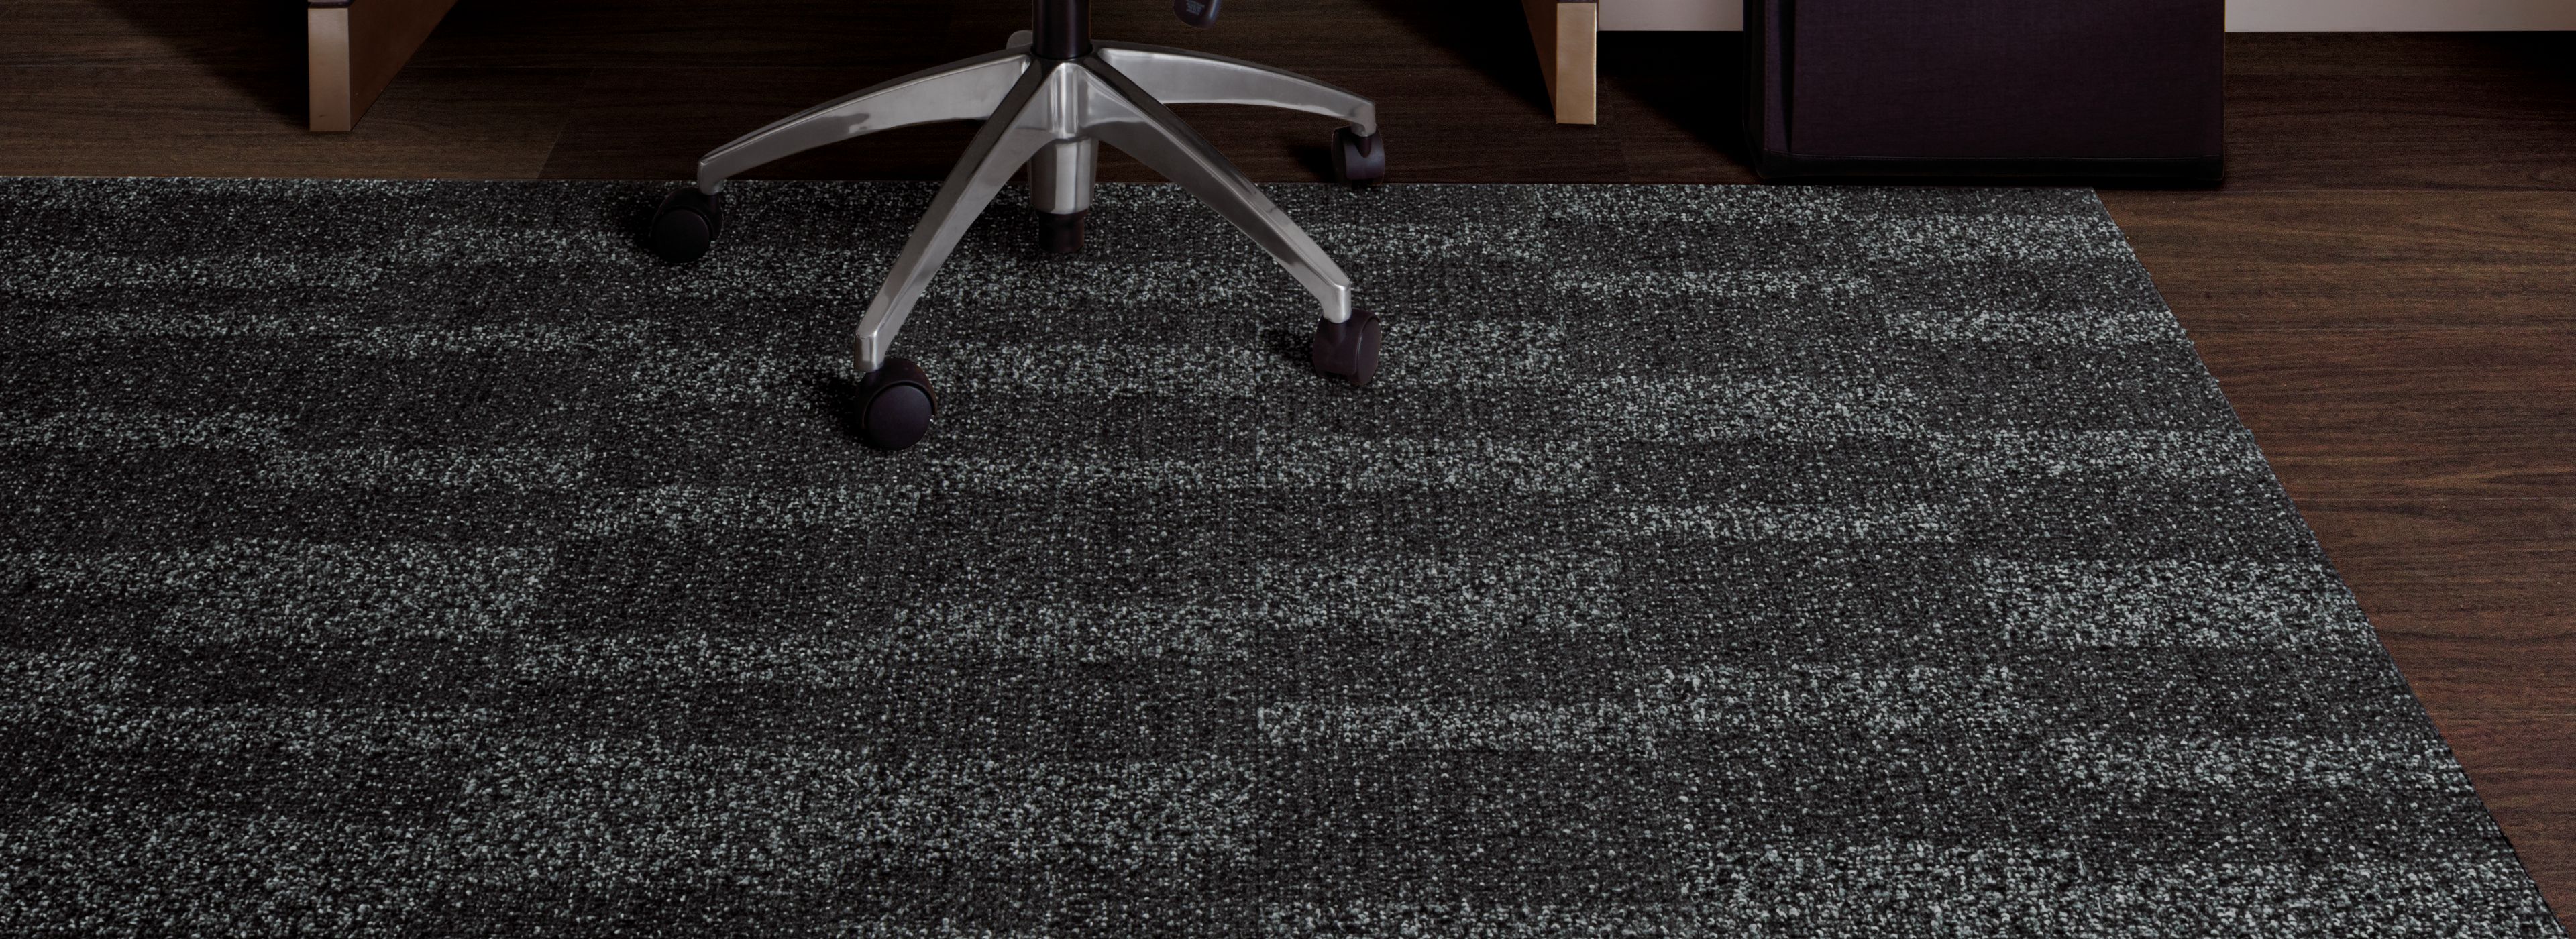 Interface RMS 706 plank carpet tile and Natural Woodgrains LVT in hotel guest room numéro d’image 1